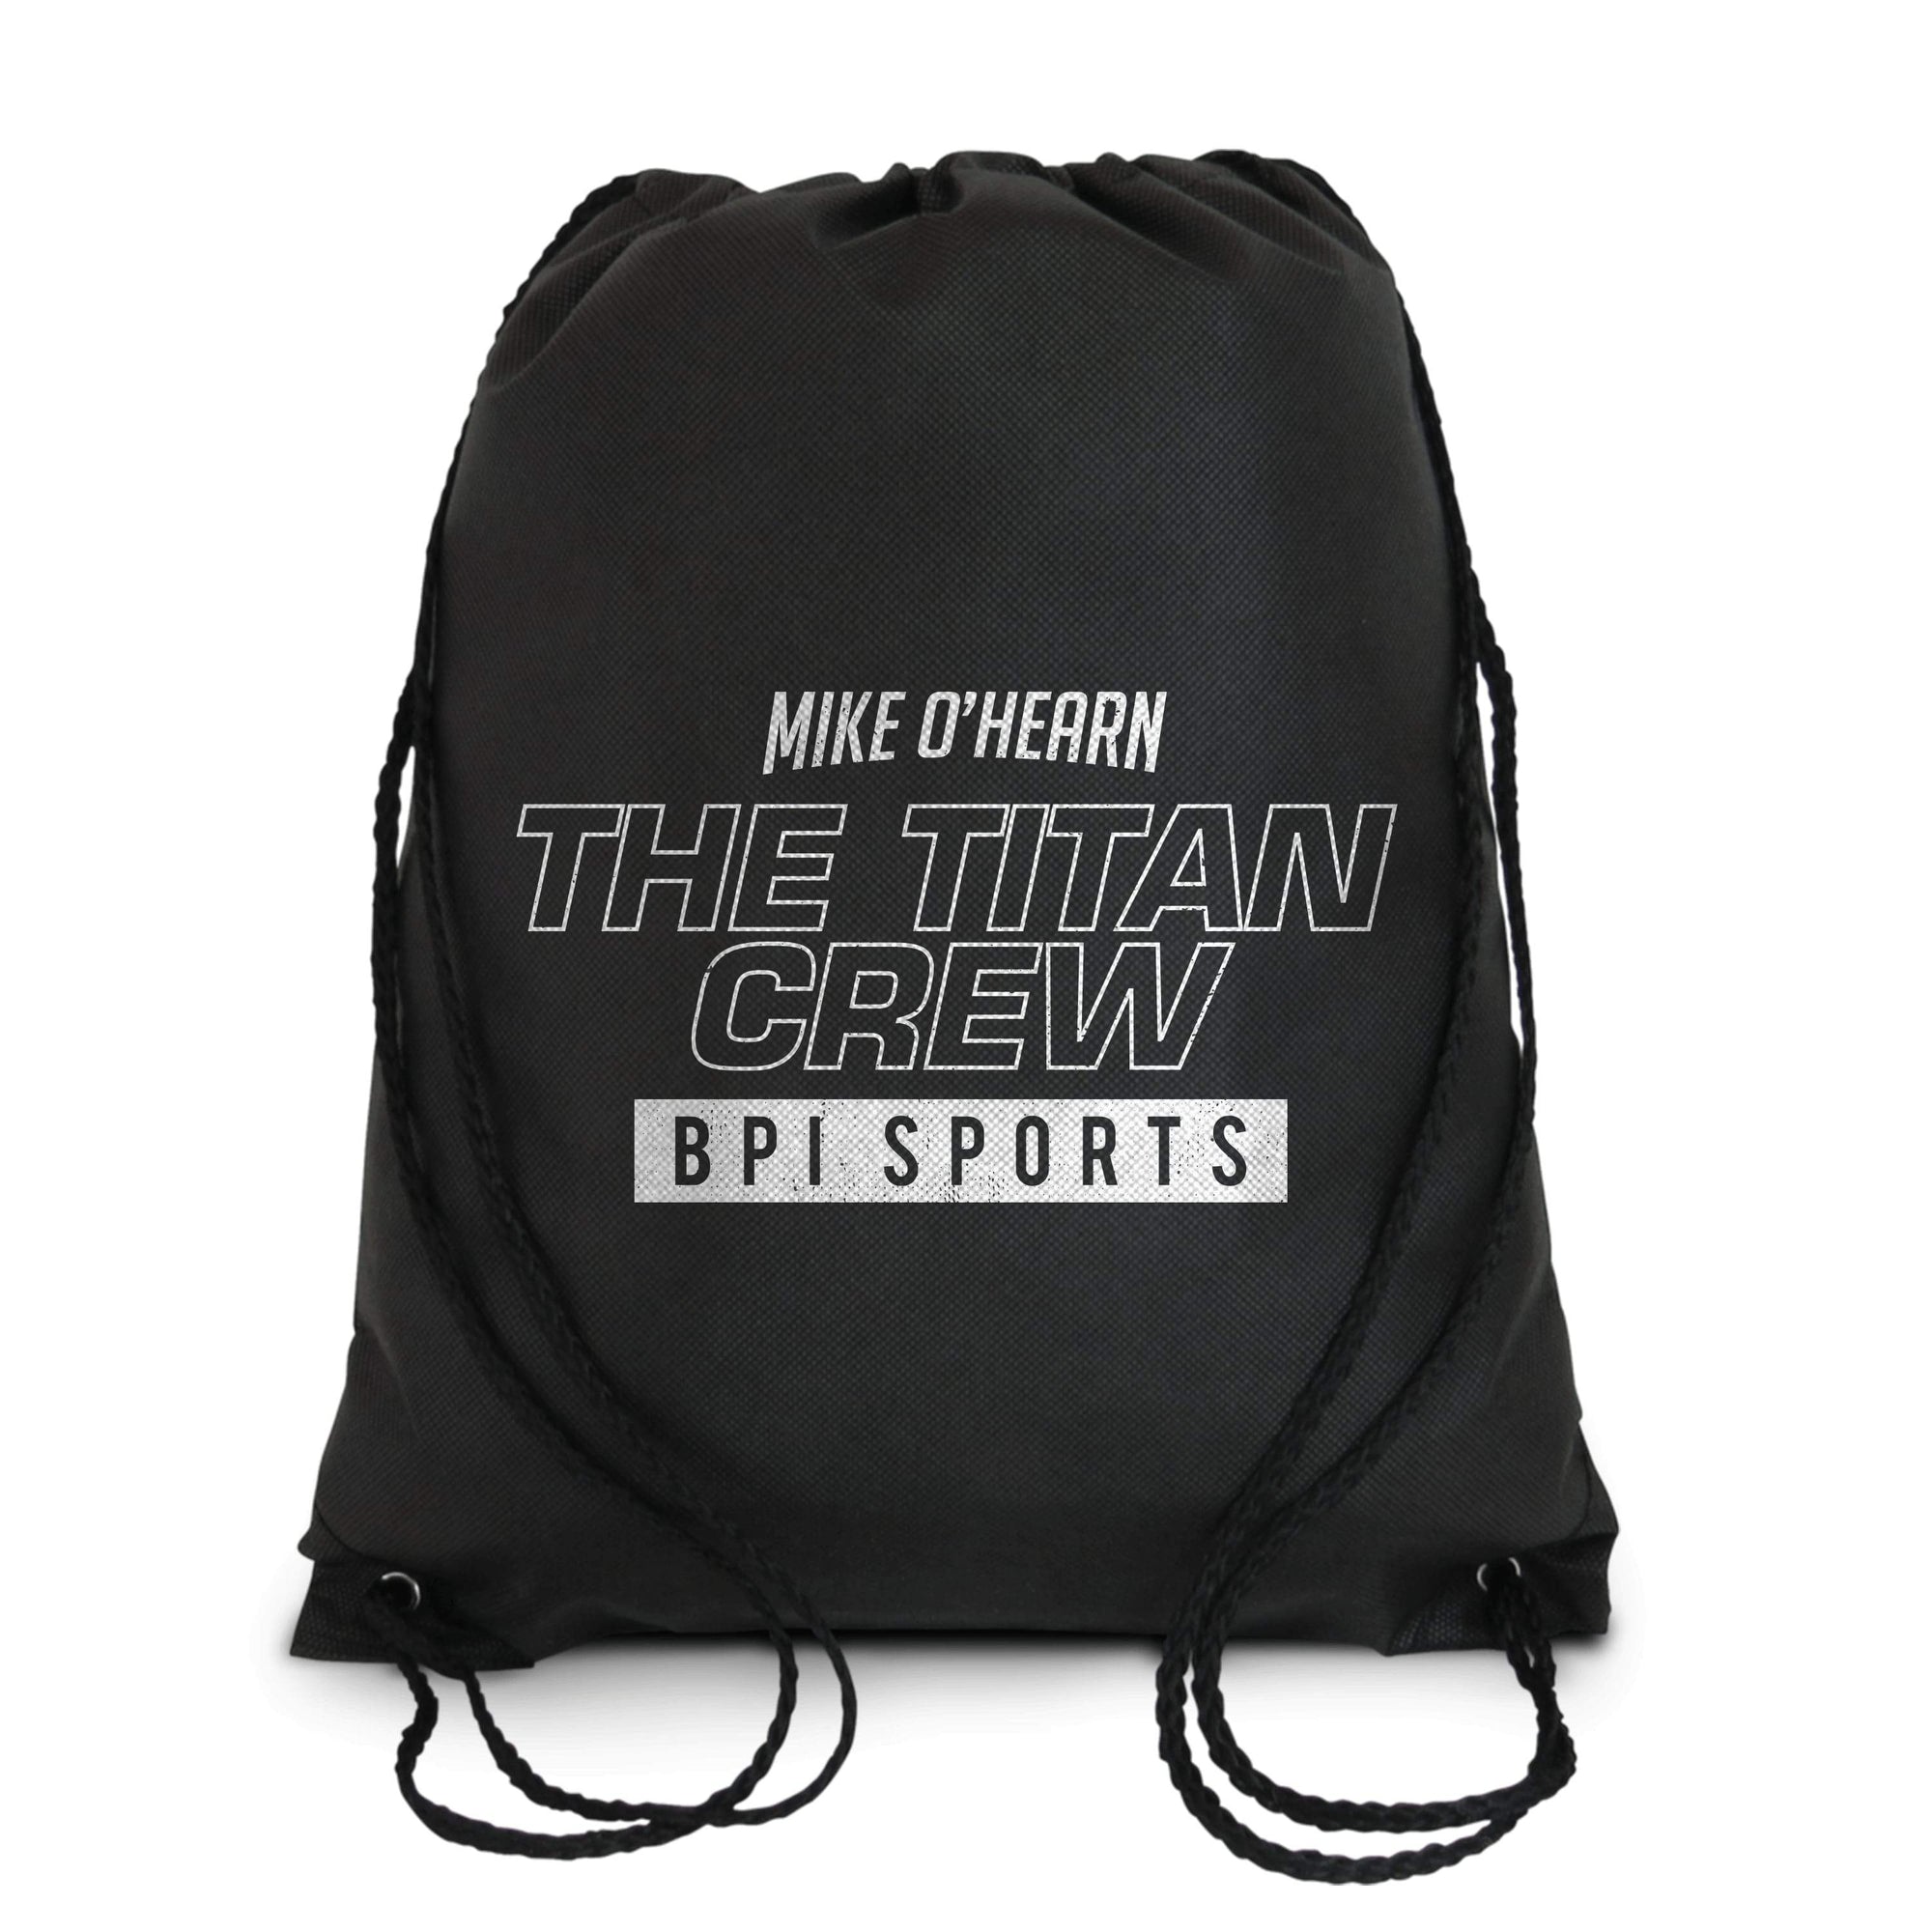 Black drawstring bag with logo Mike O'Hearn The titan crew . BPI sports